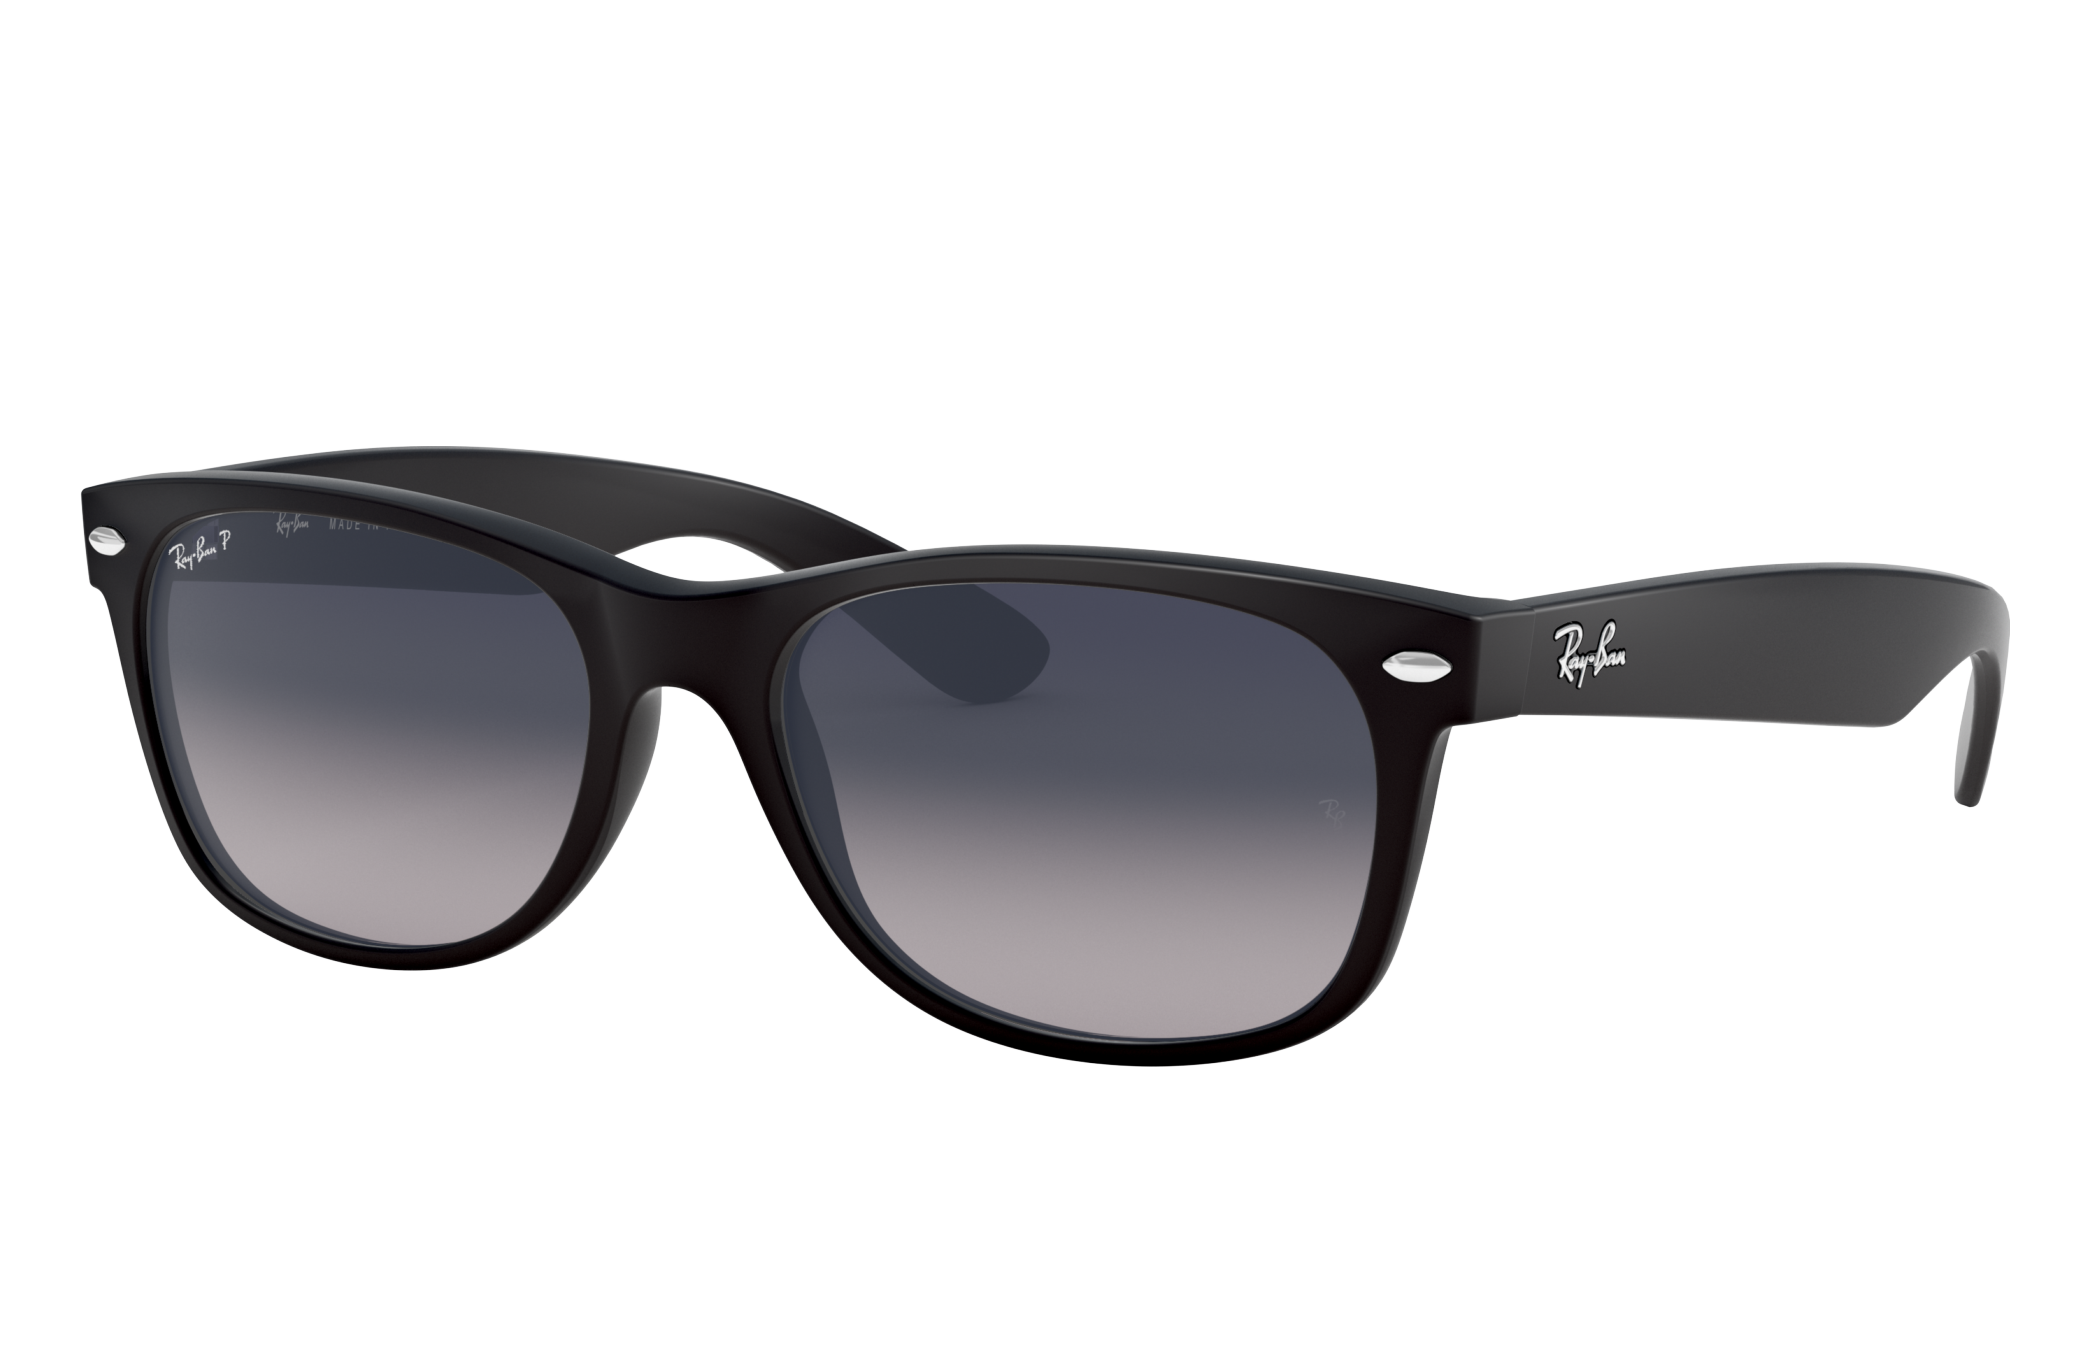 Ray-Ban New Wayfarer Classic Sunglasses Frame Blue Lenses Polarized in Grey - Save 23% Black Womens Sunglasses Ray-Ban Sunglasses 